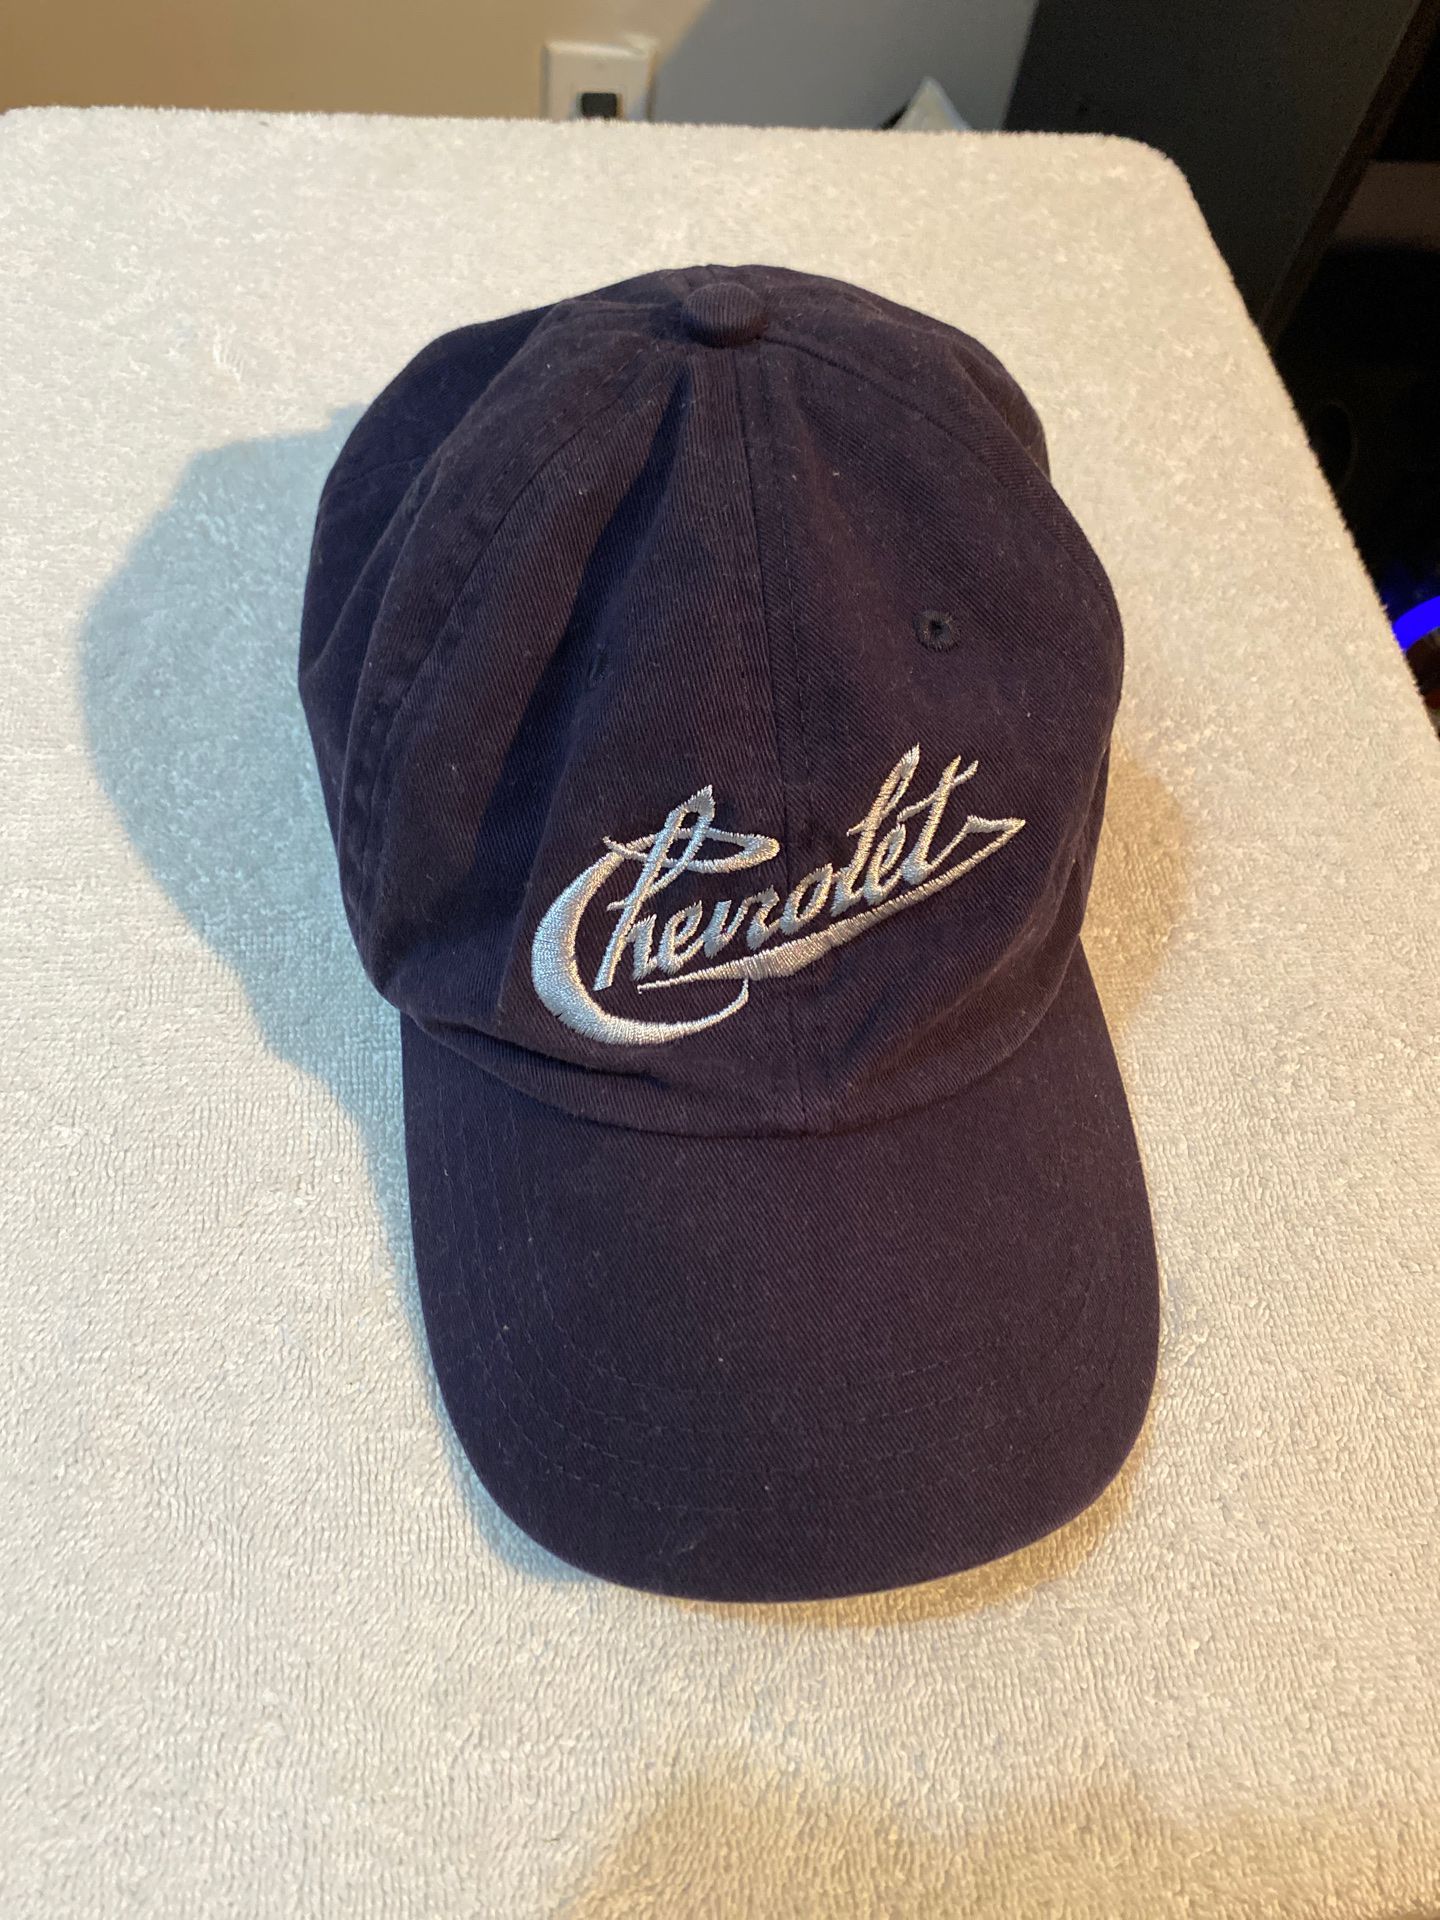 Vintage Chevrolet Chevy Baseball Cap